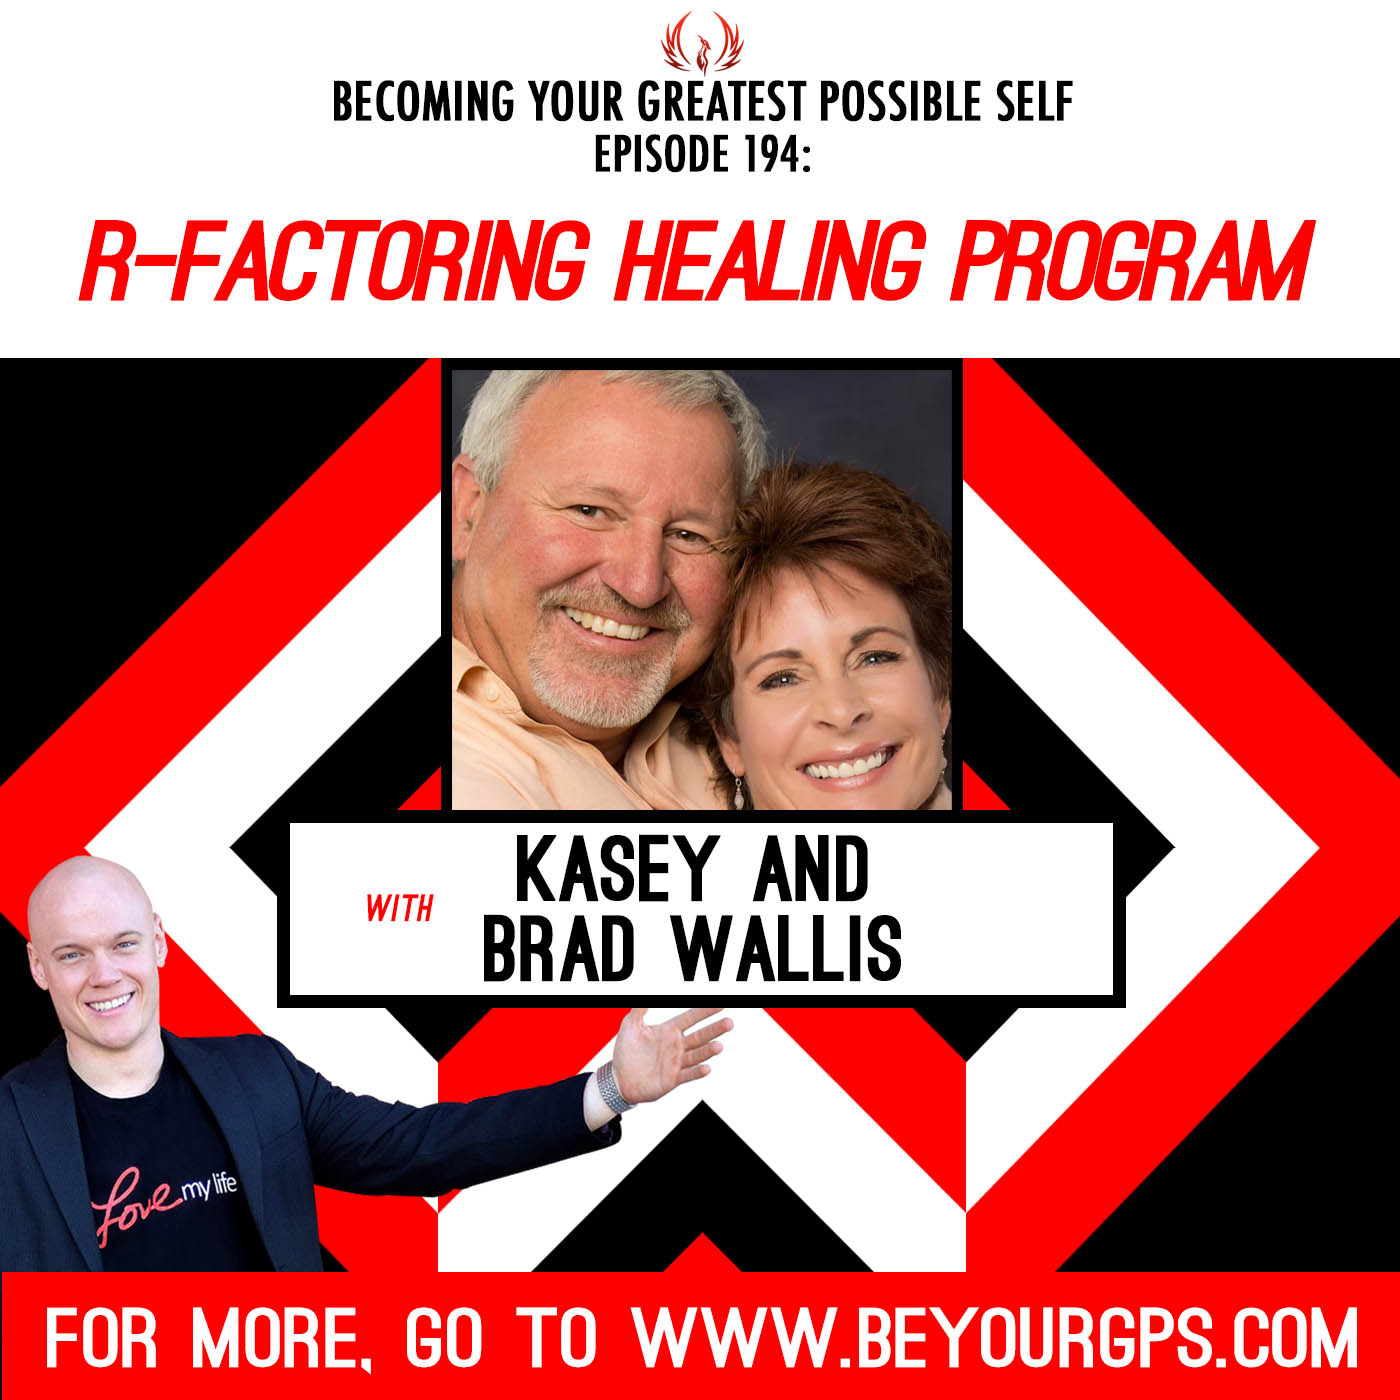 R-Factoring Healing Program with Kasey and Brad Wallis